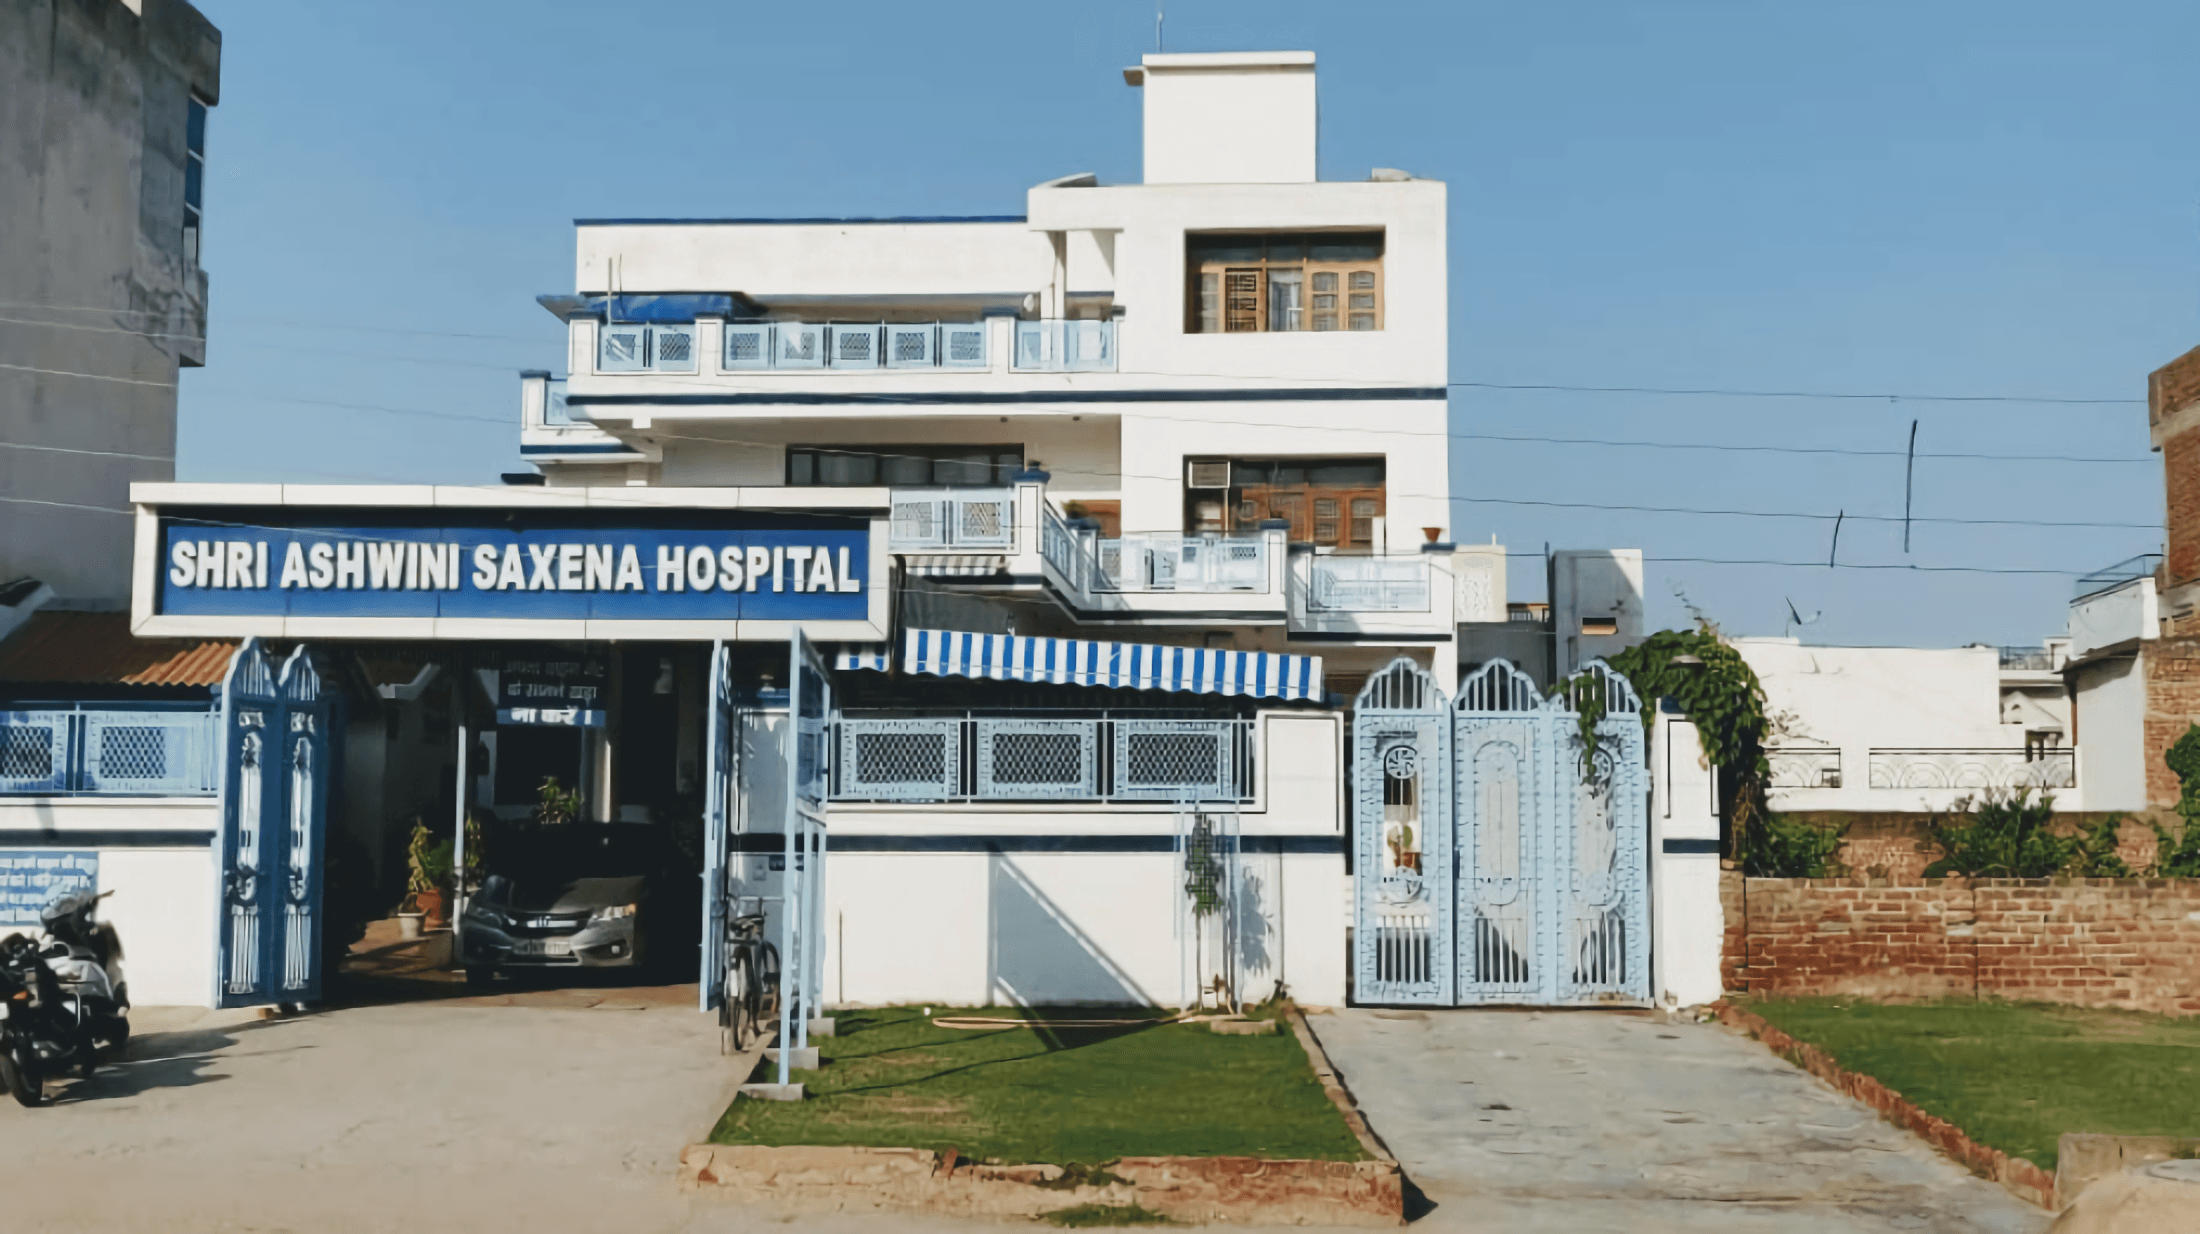 Shri Ashwini Saxena Hospital